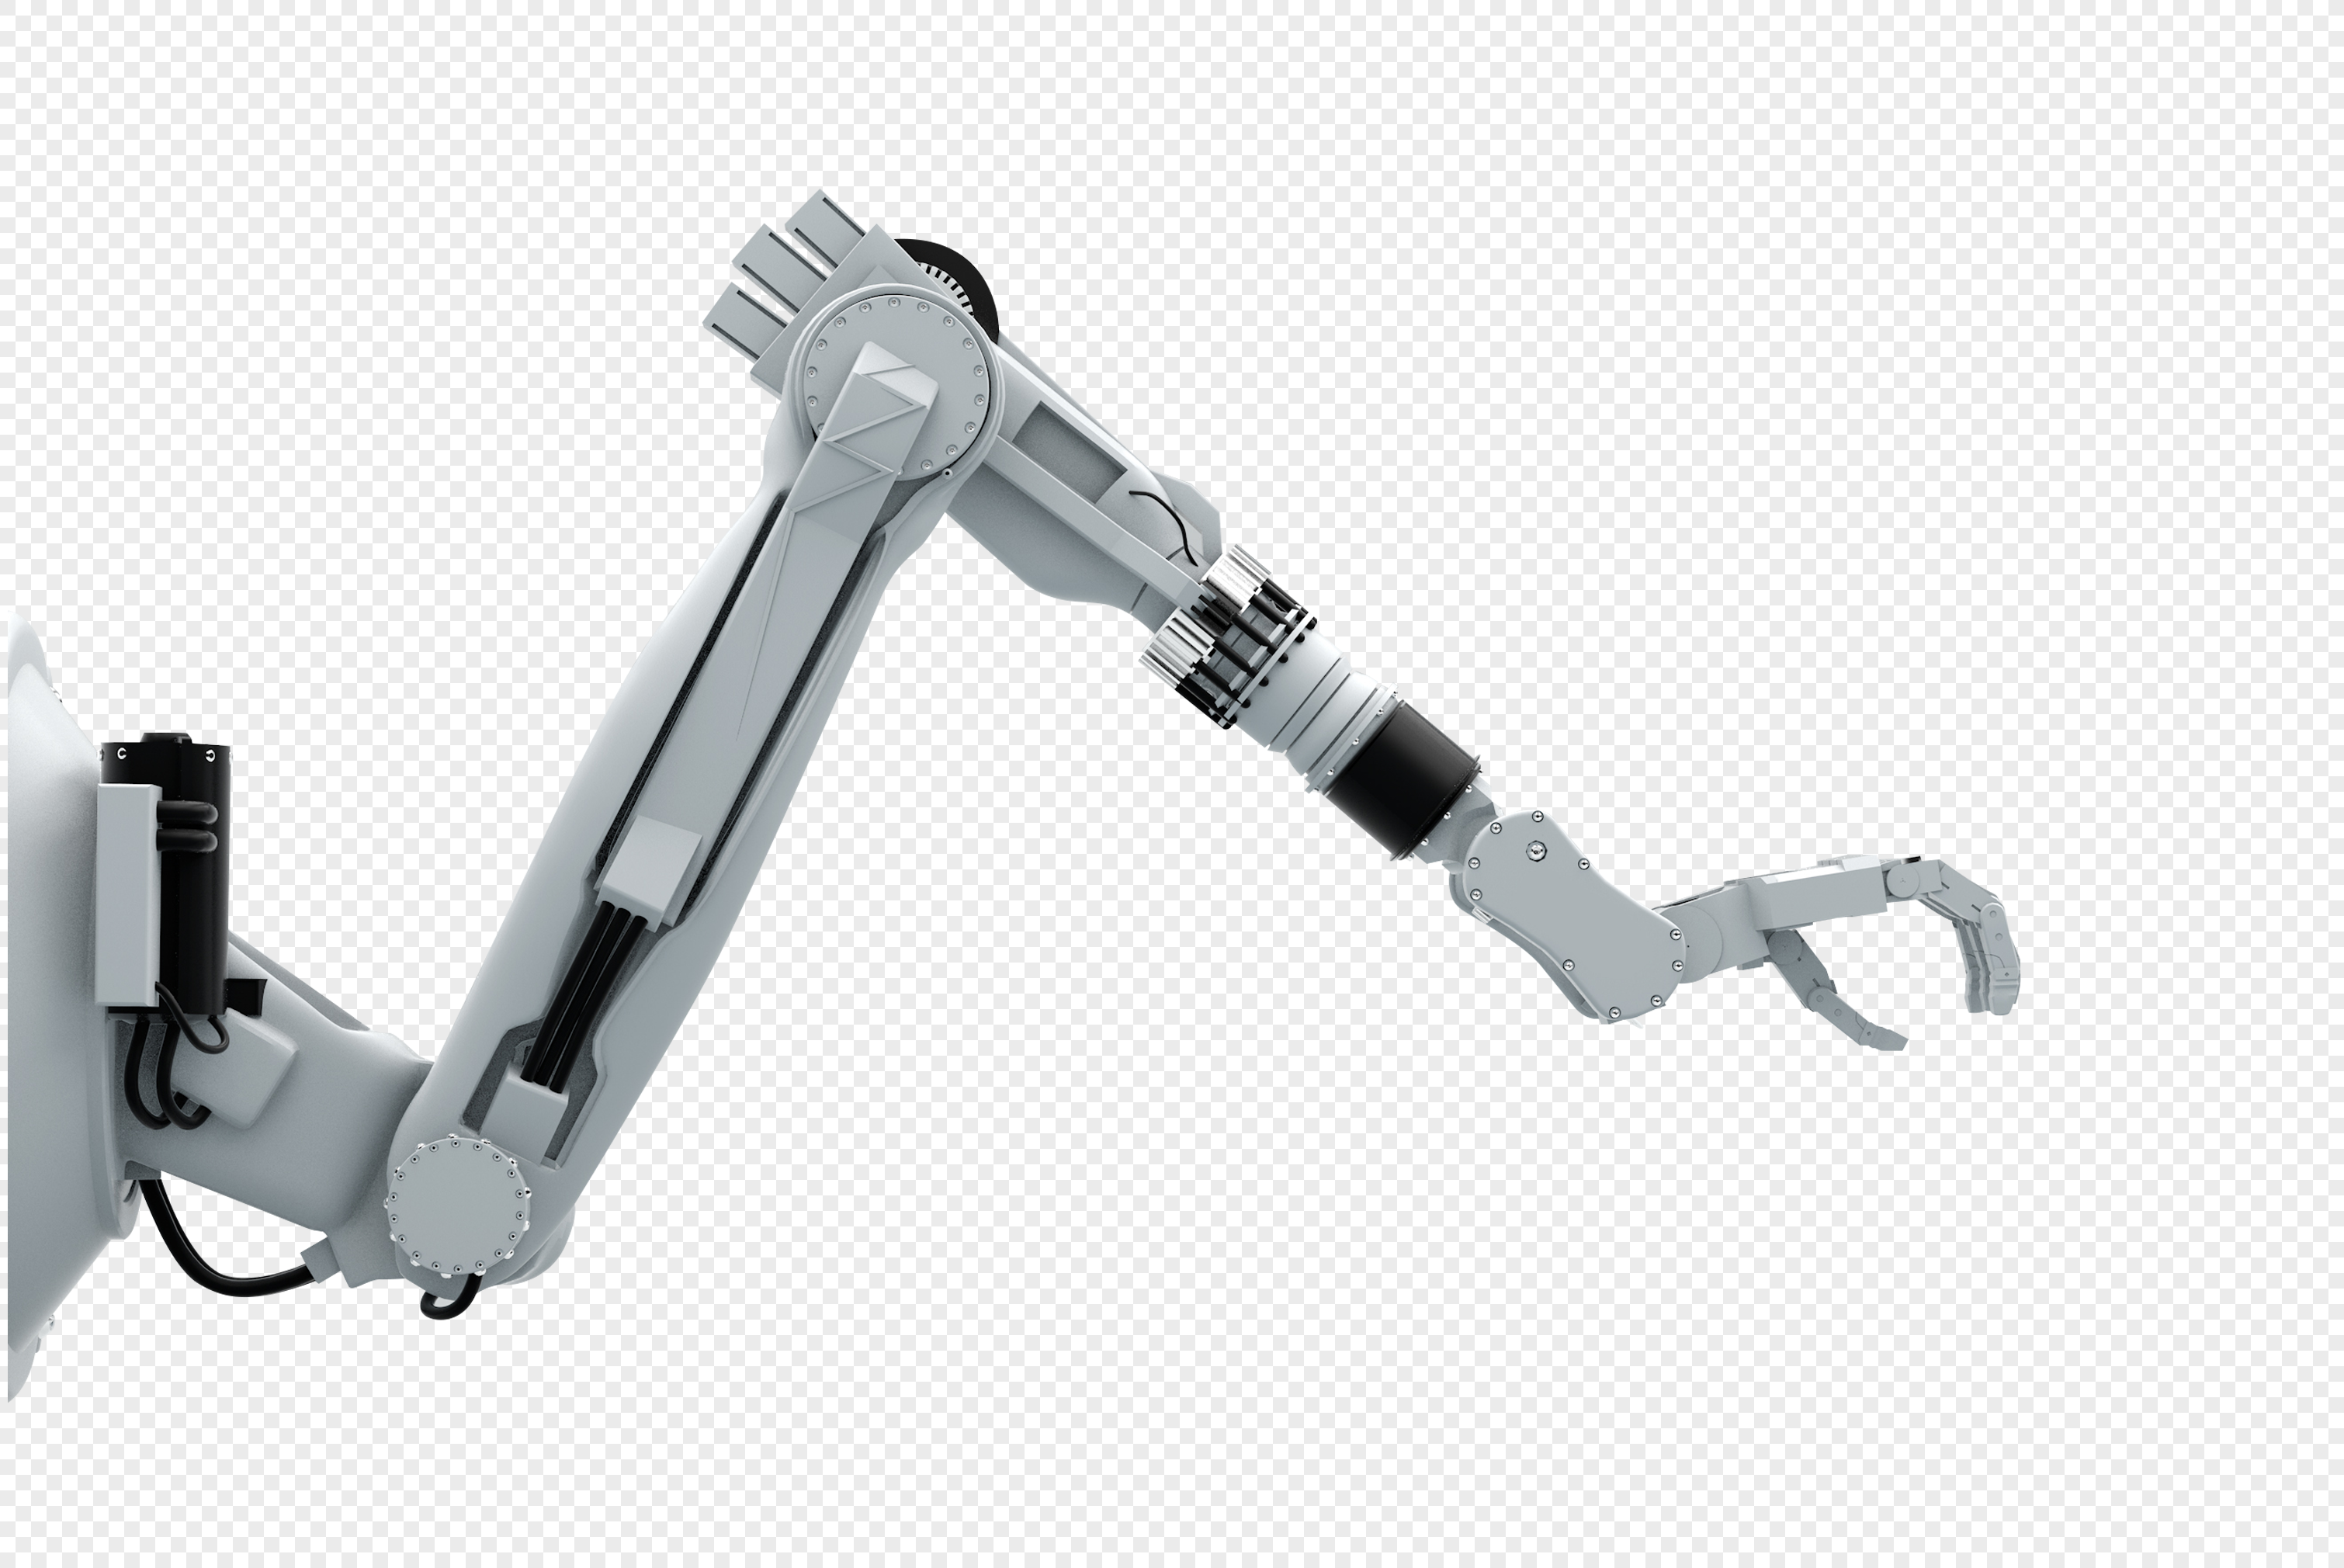 Robot Arm Pictures For Free Vectors Download - Lovepik.com